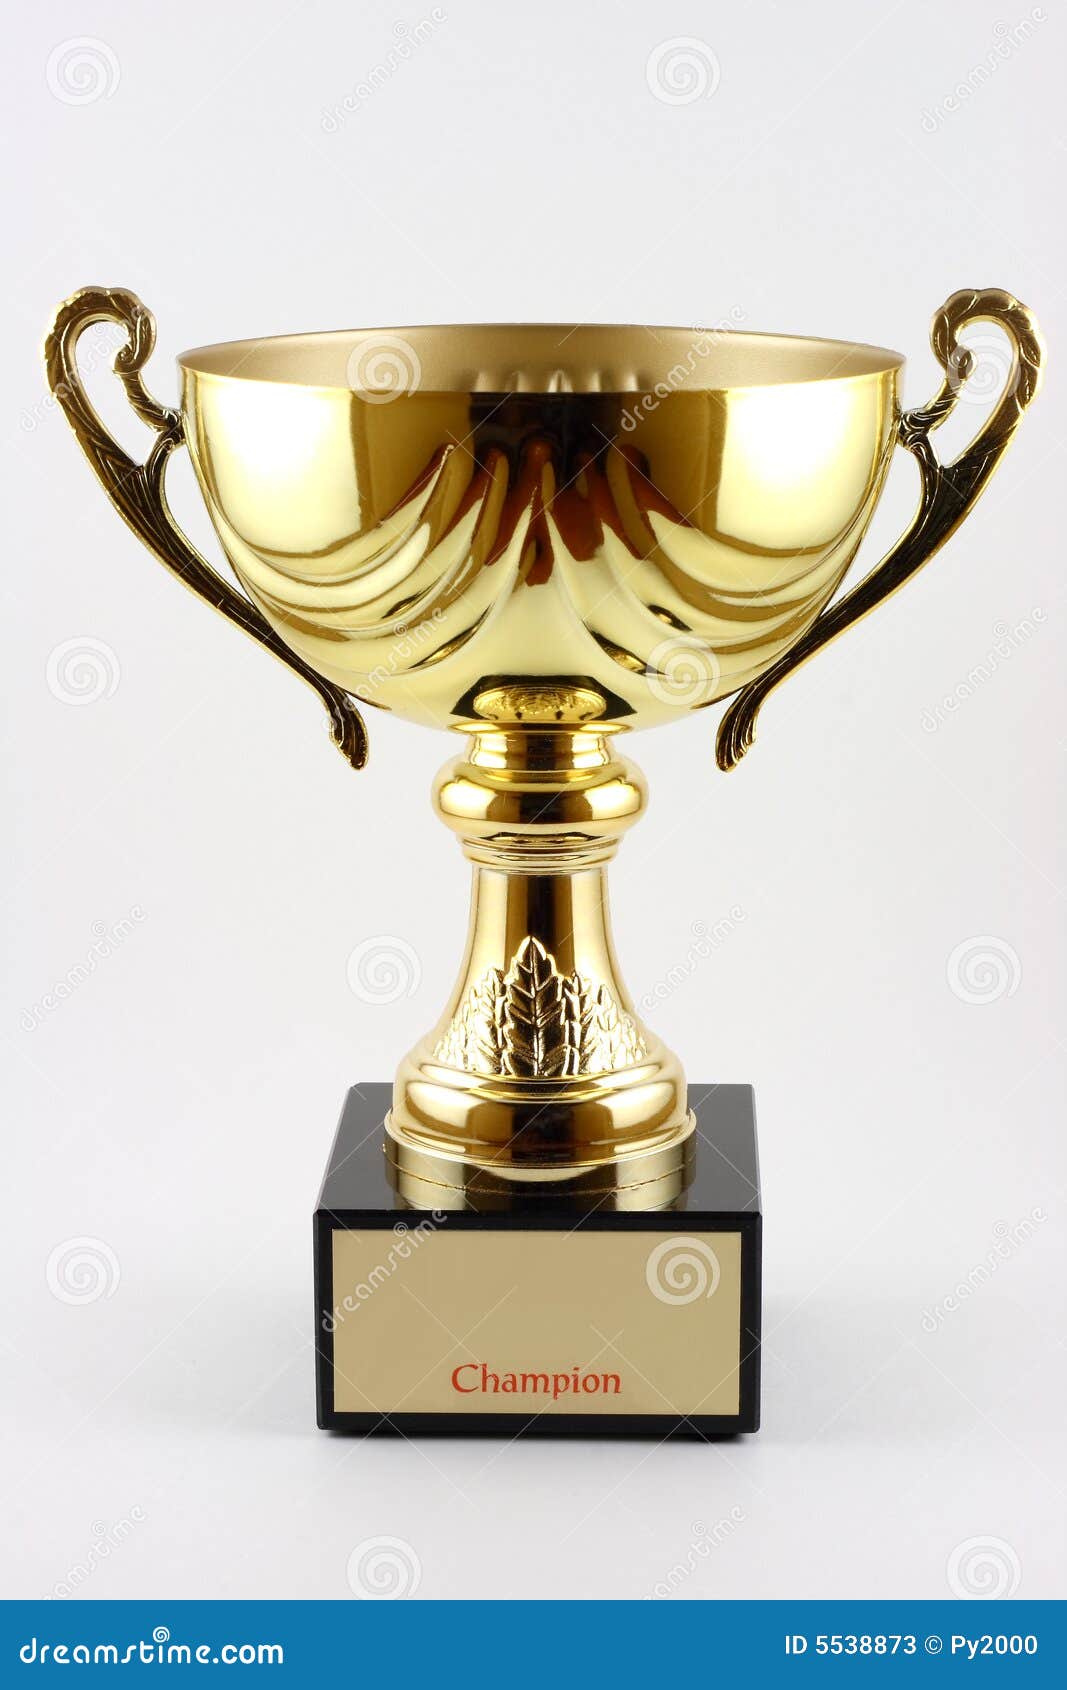 Trophy stock image. Image of challenge, heavy, champion - 5538873